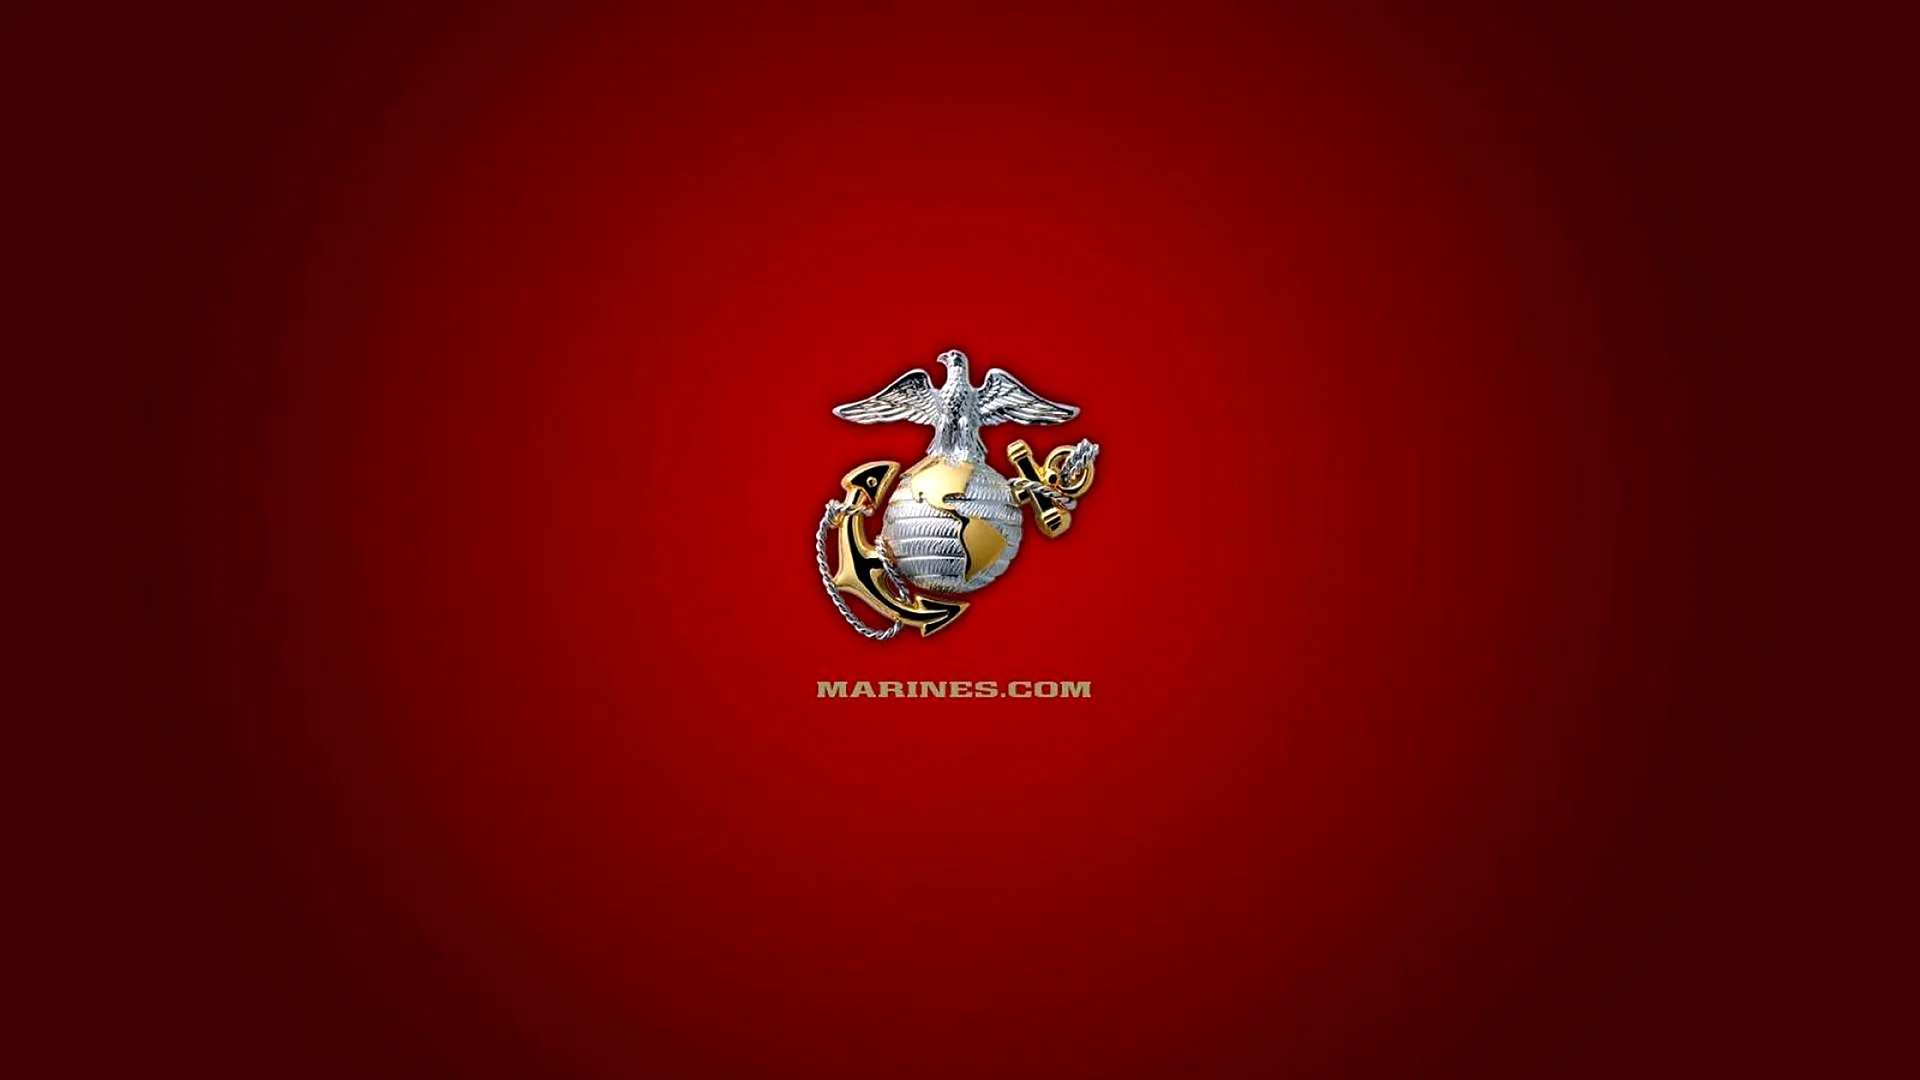 Marine Corps Screensaver Wallpapers - Free Marine Corps Screensaver ...